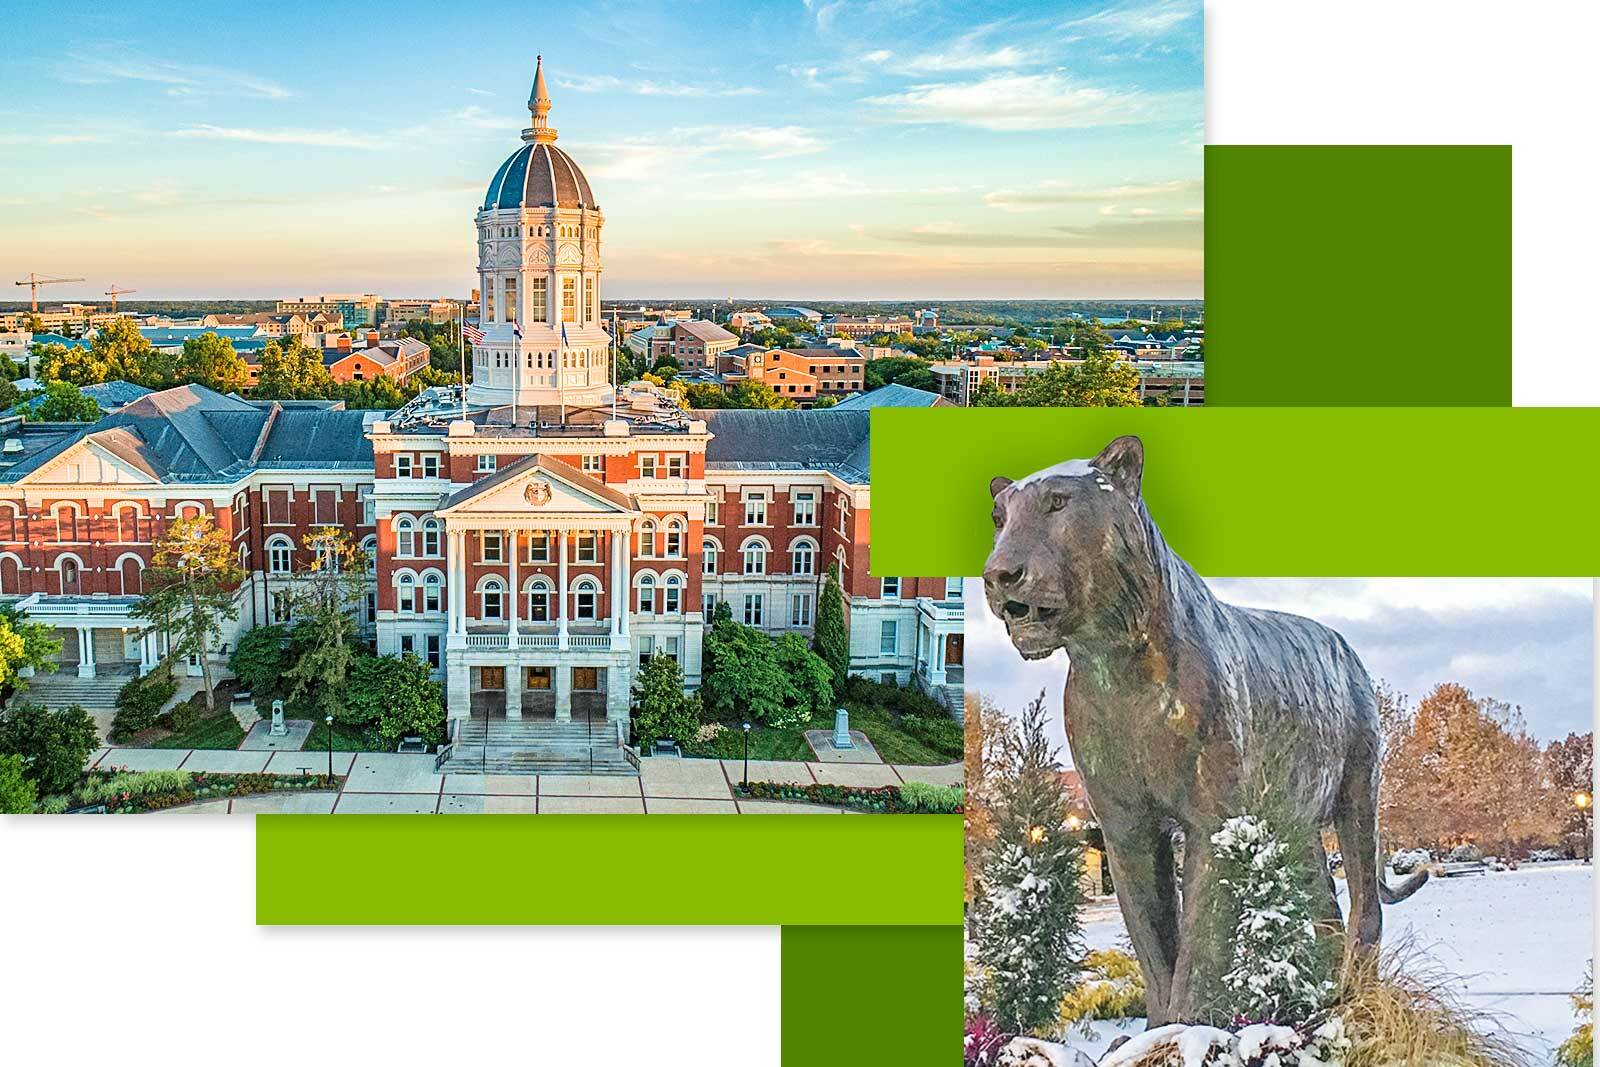 photo of Missouri University campus and tiger mascot statue